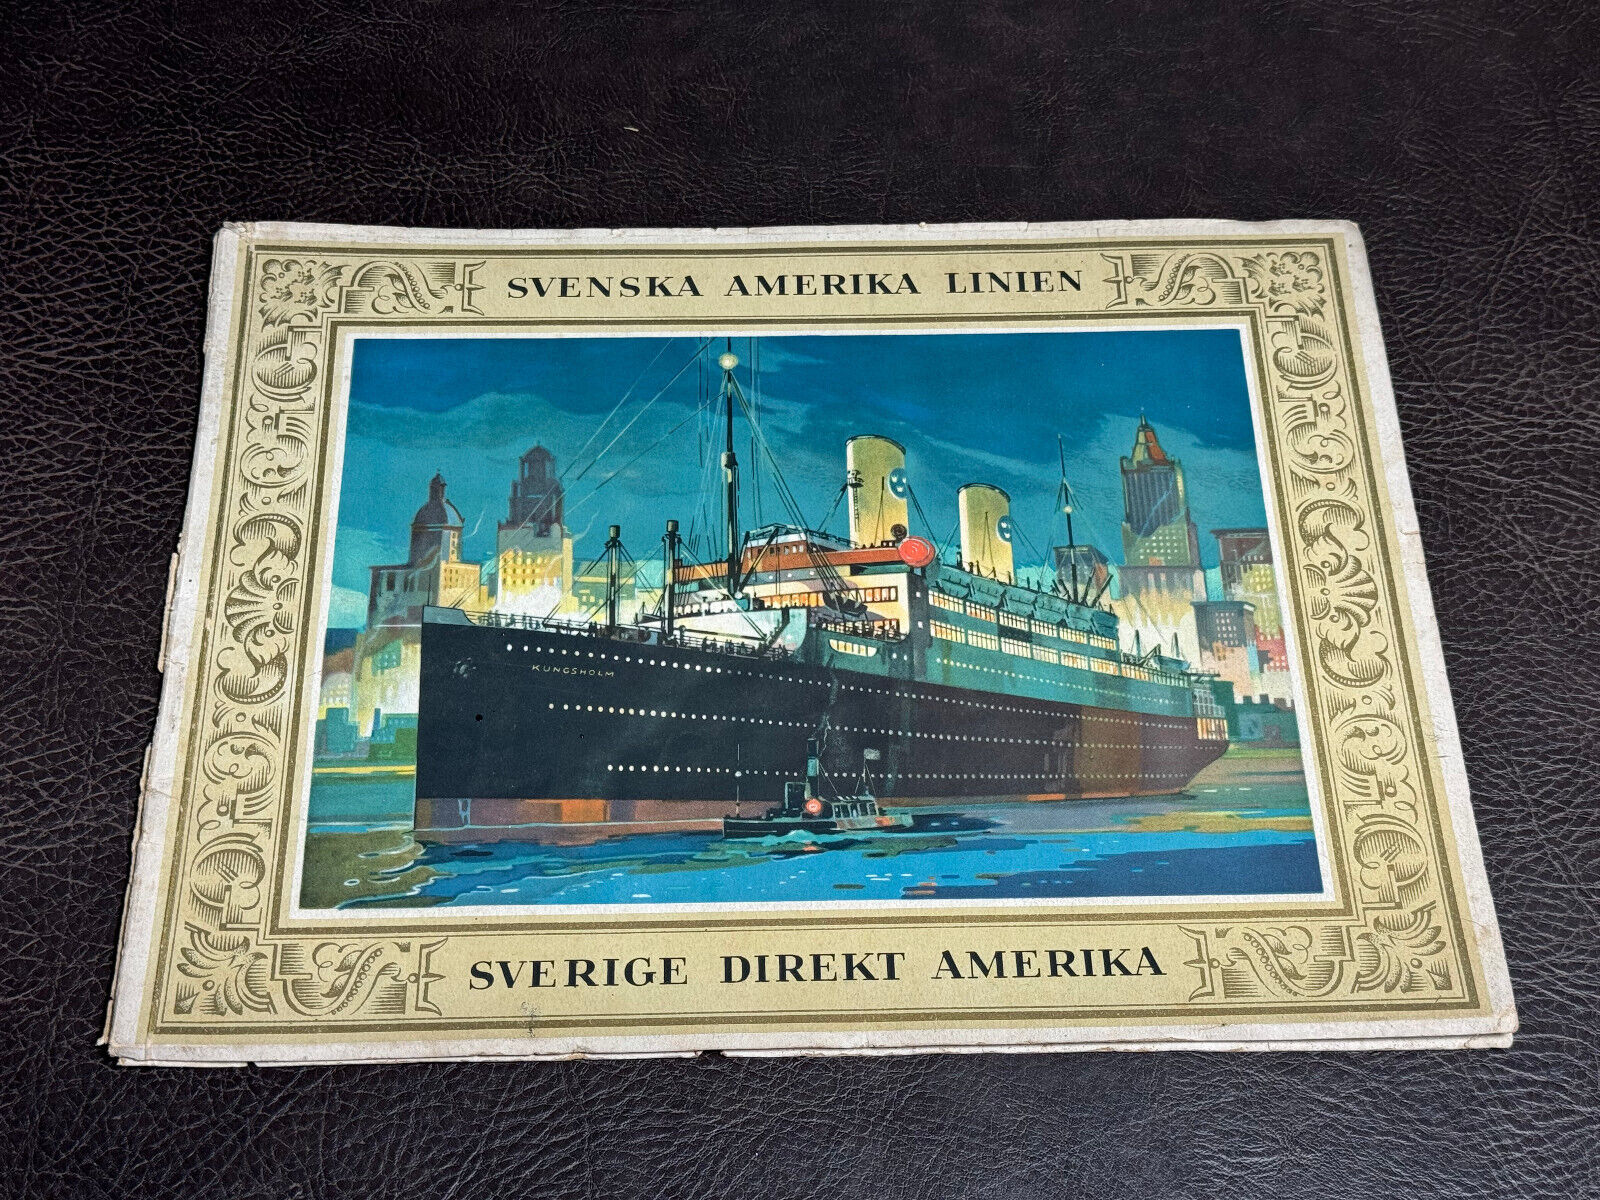 RARE Antique 1929 Swedish America Line Ship Brochure Ephemera Art Deco Art Print